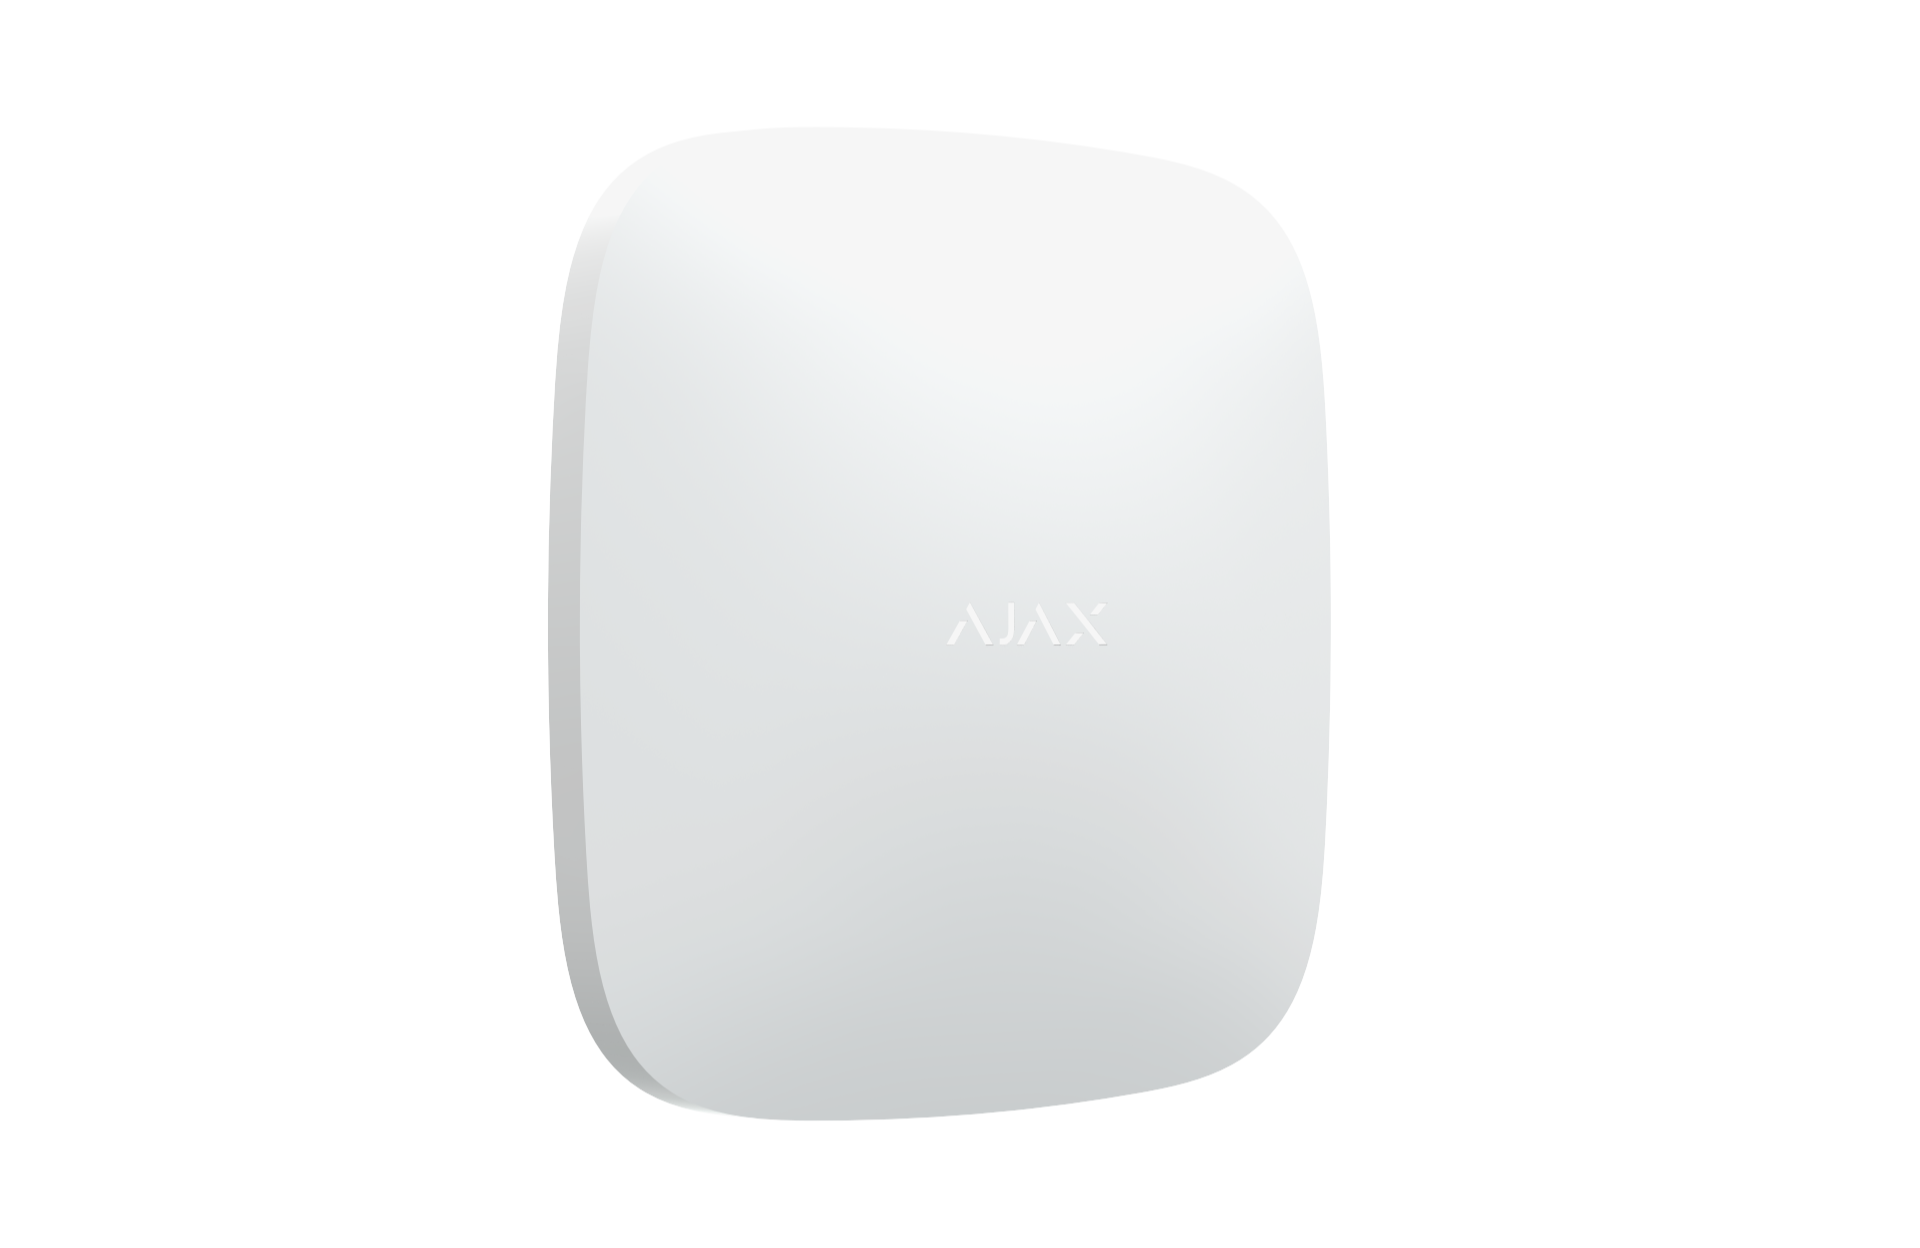 Ajax Hub Plus белый Контроллер систем безопасности Ajax